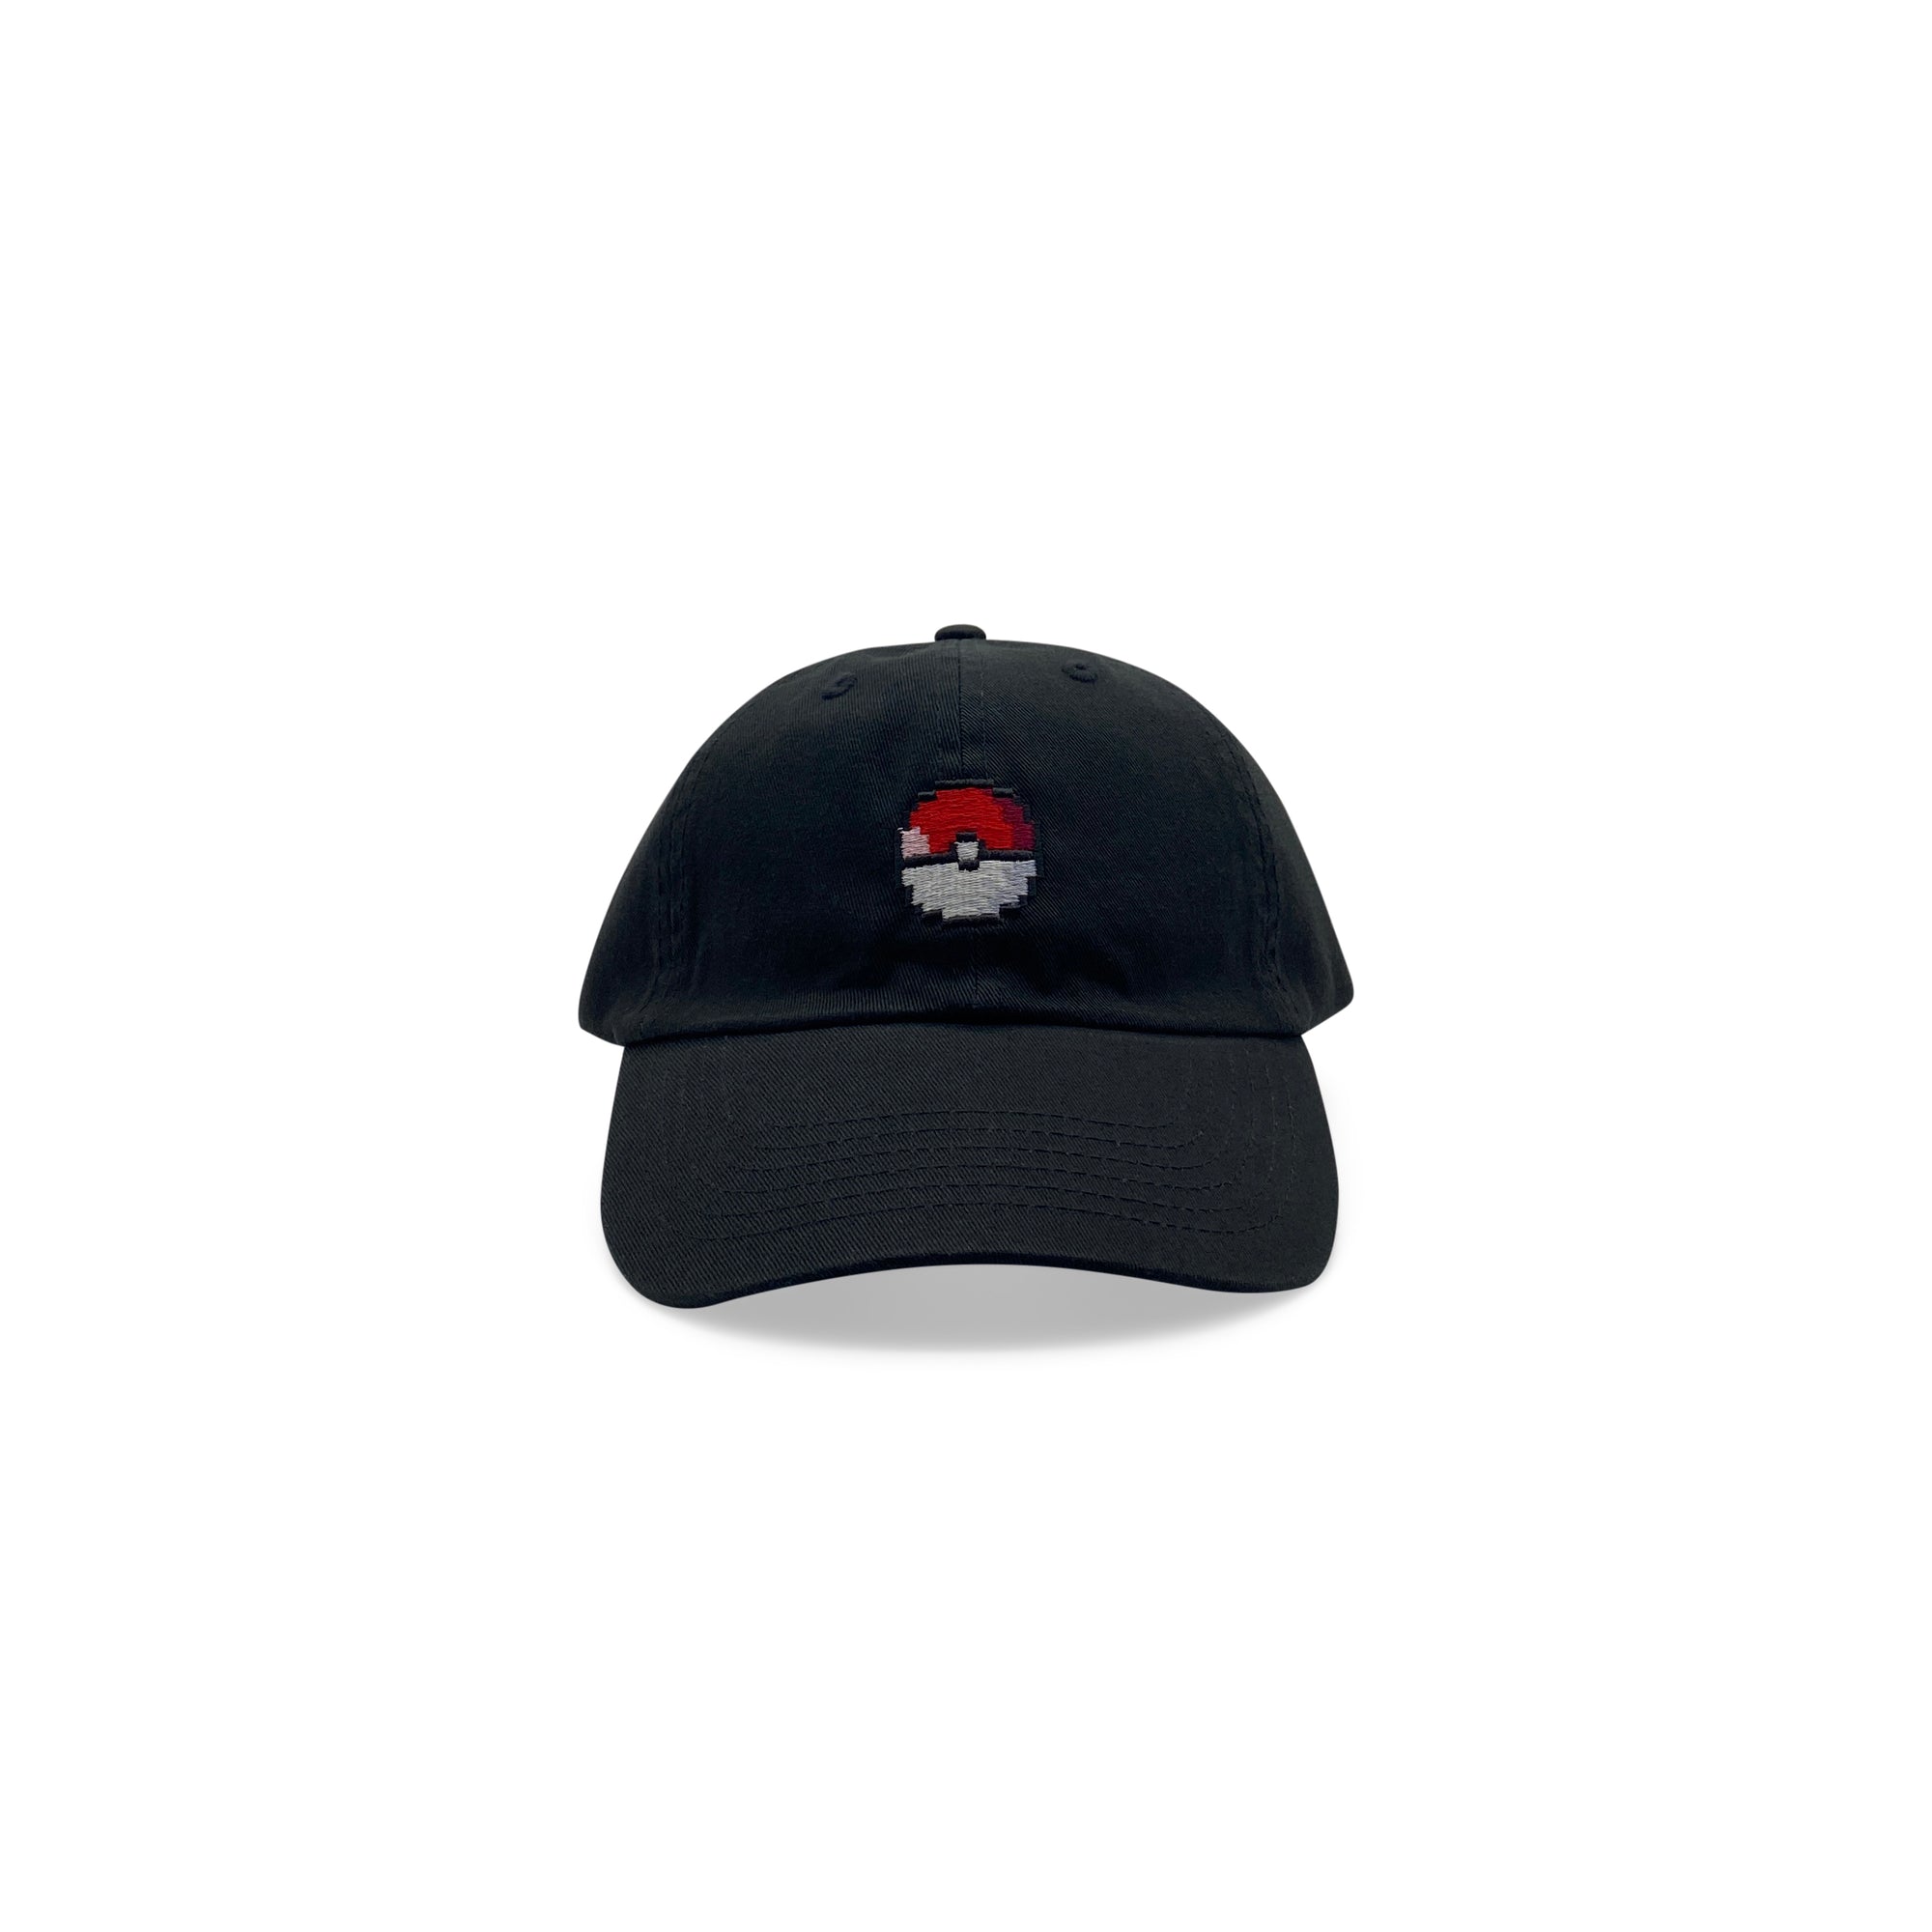 Pokeball Hat